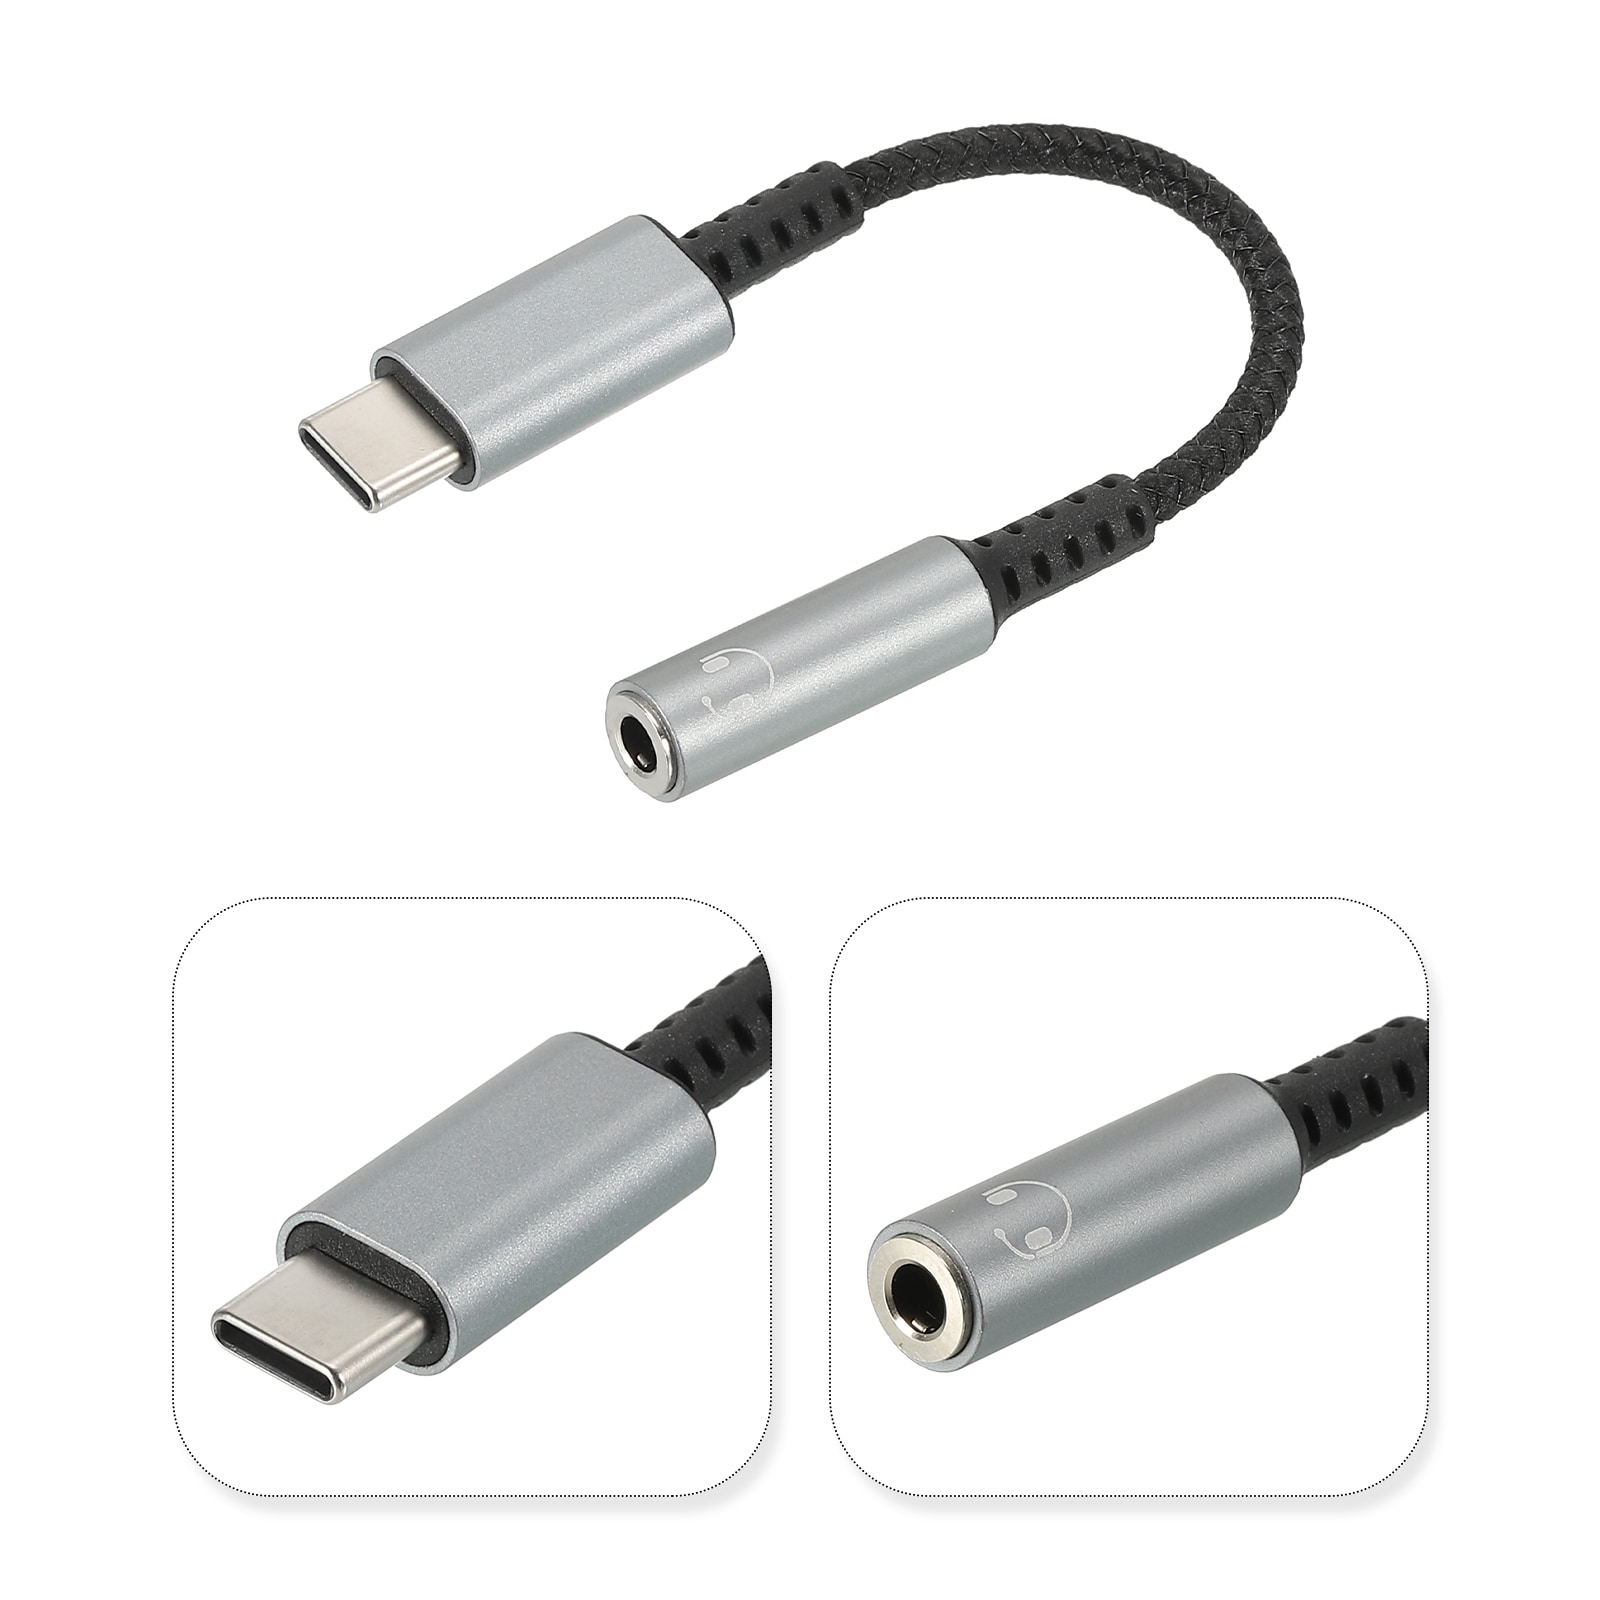 Adaptateur audio USB, adaptateur USB vers jack audio 3,5 mm